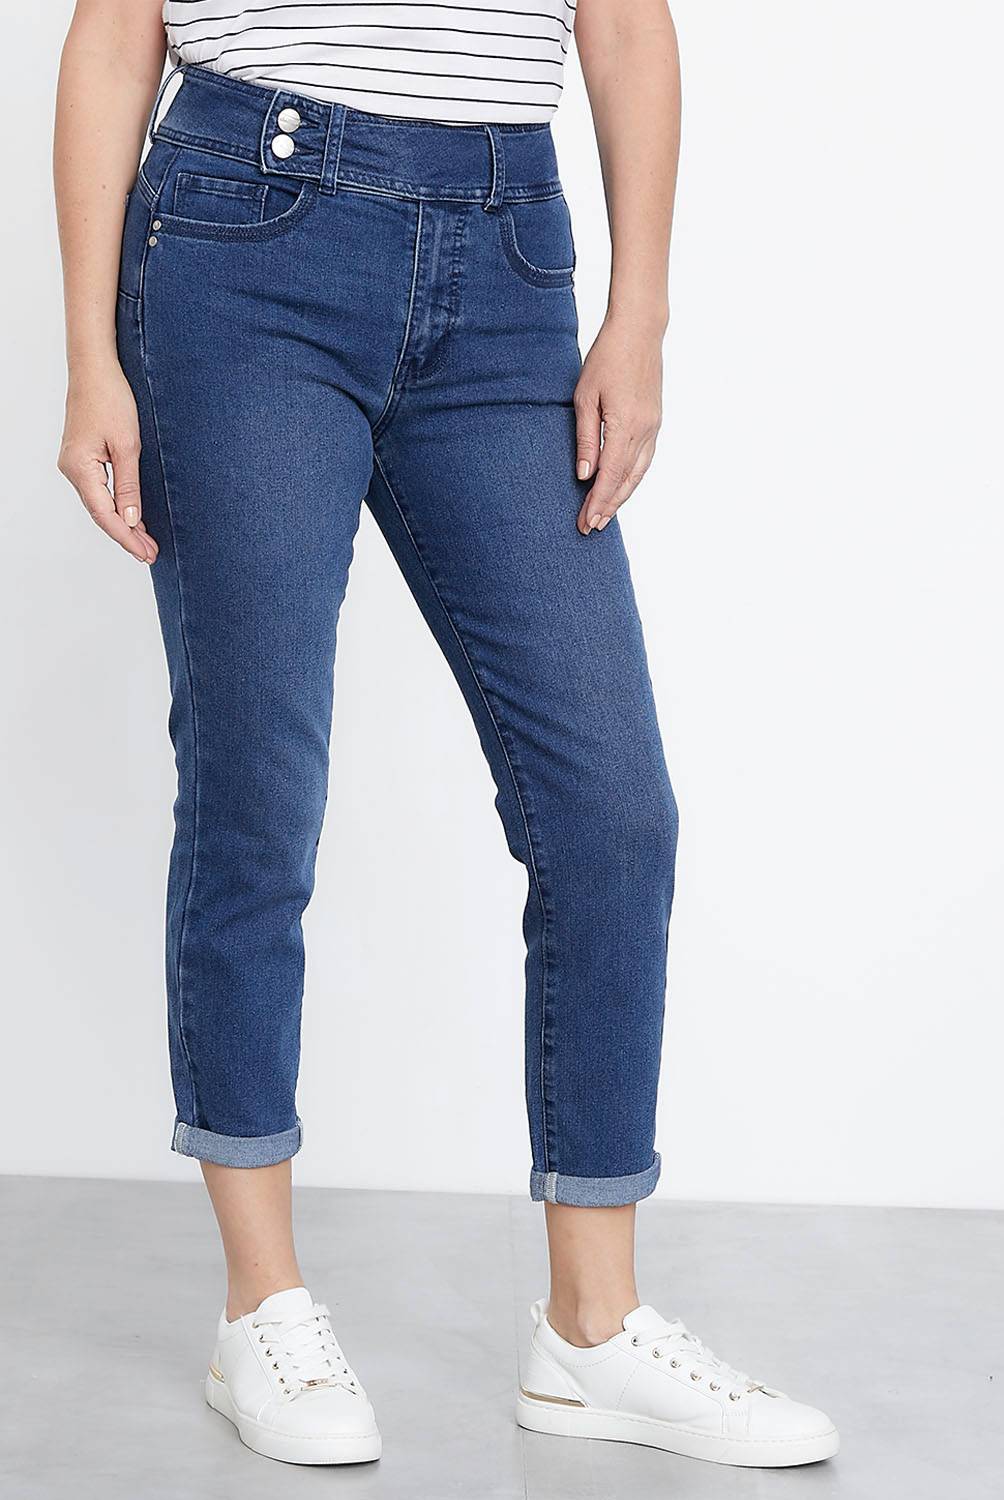 NEWPORT - Jeans Skinny Tiro Alto Denim Mujer Newport